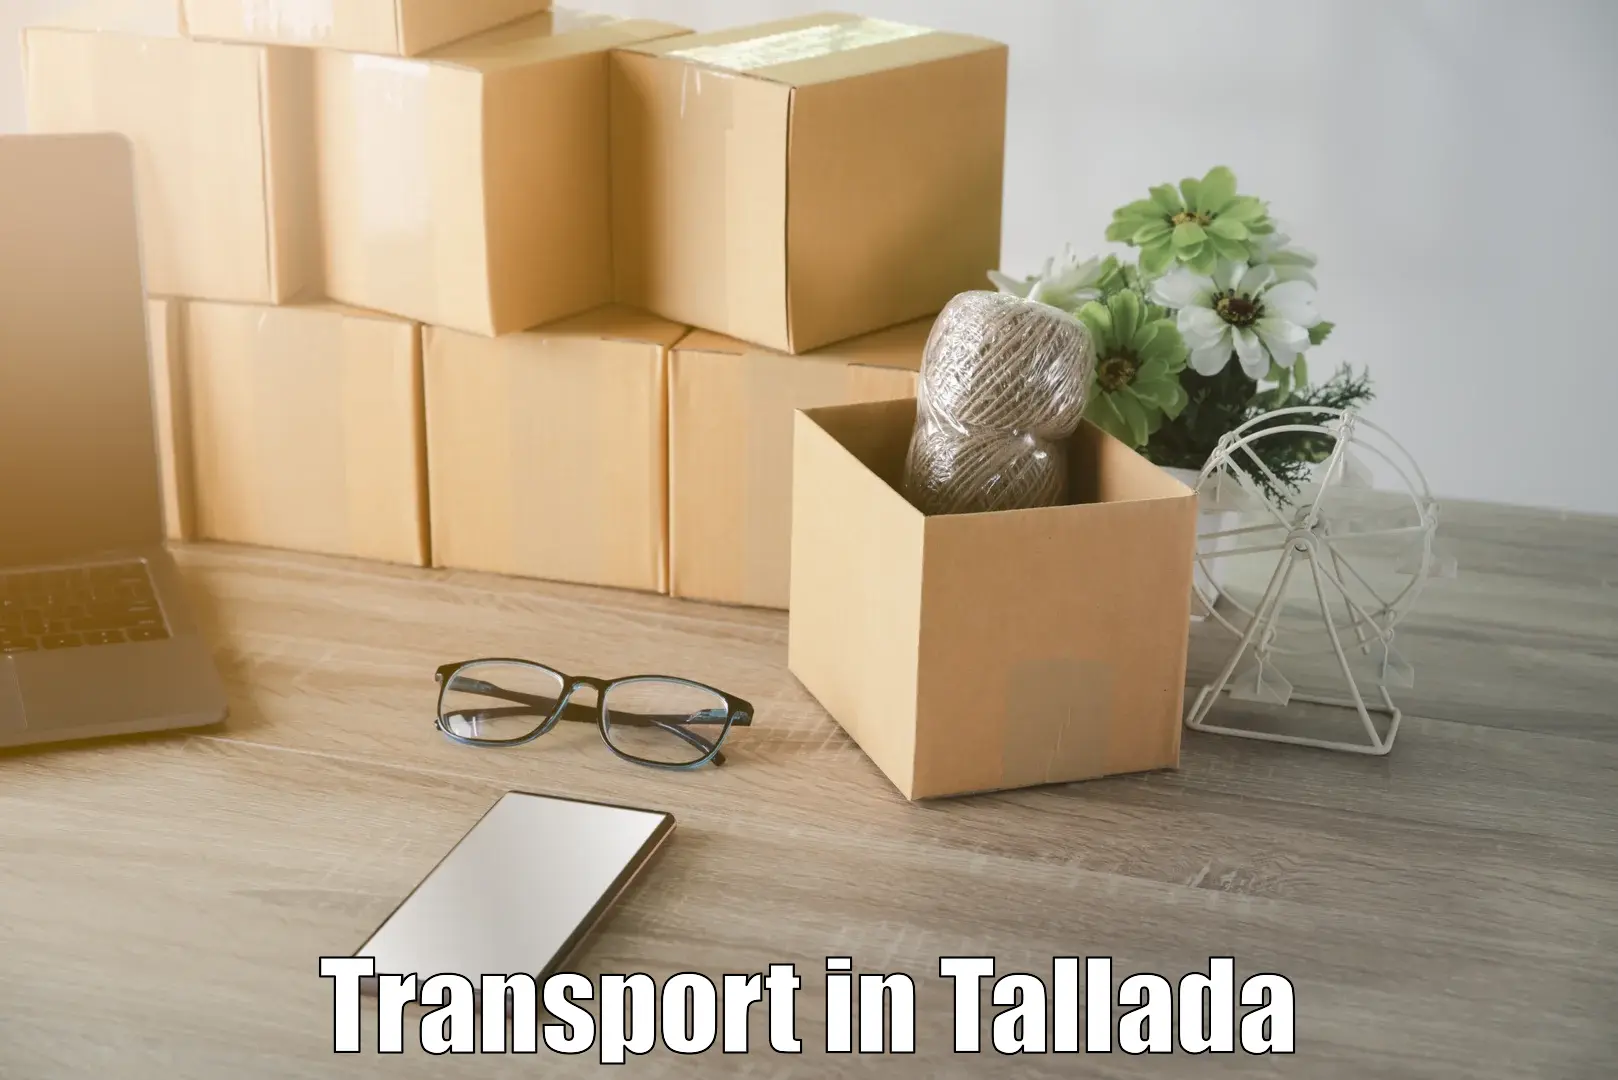 Cargo transportation services in Tallada